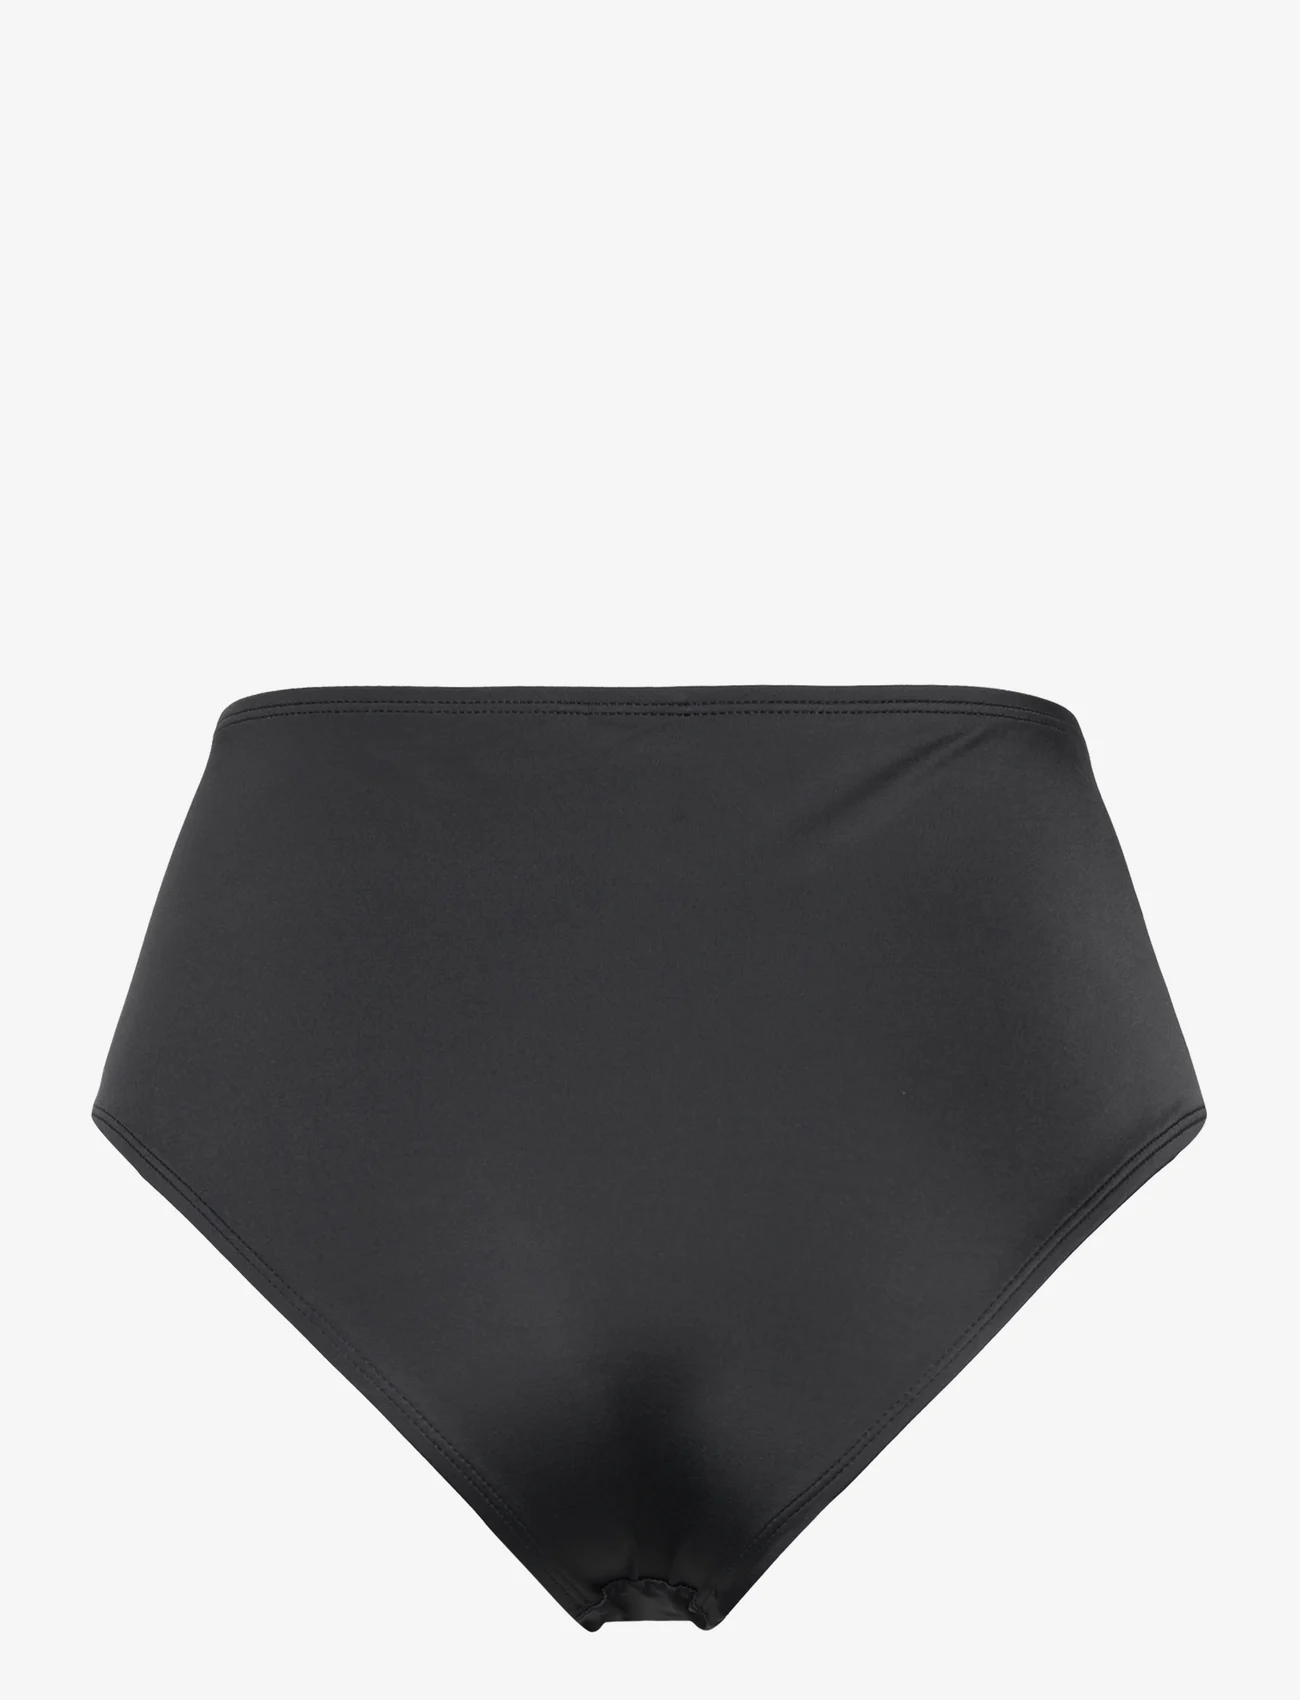 Hunkemöller - Luxe shaping cheeky hw - bikinihosen mit hoher taille - nero - 1